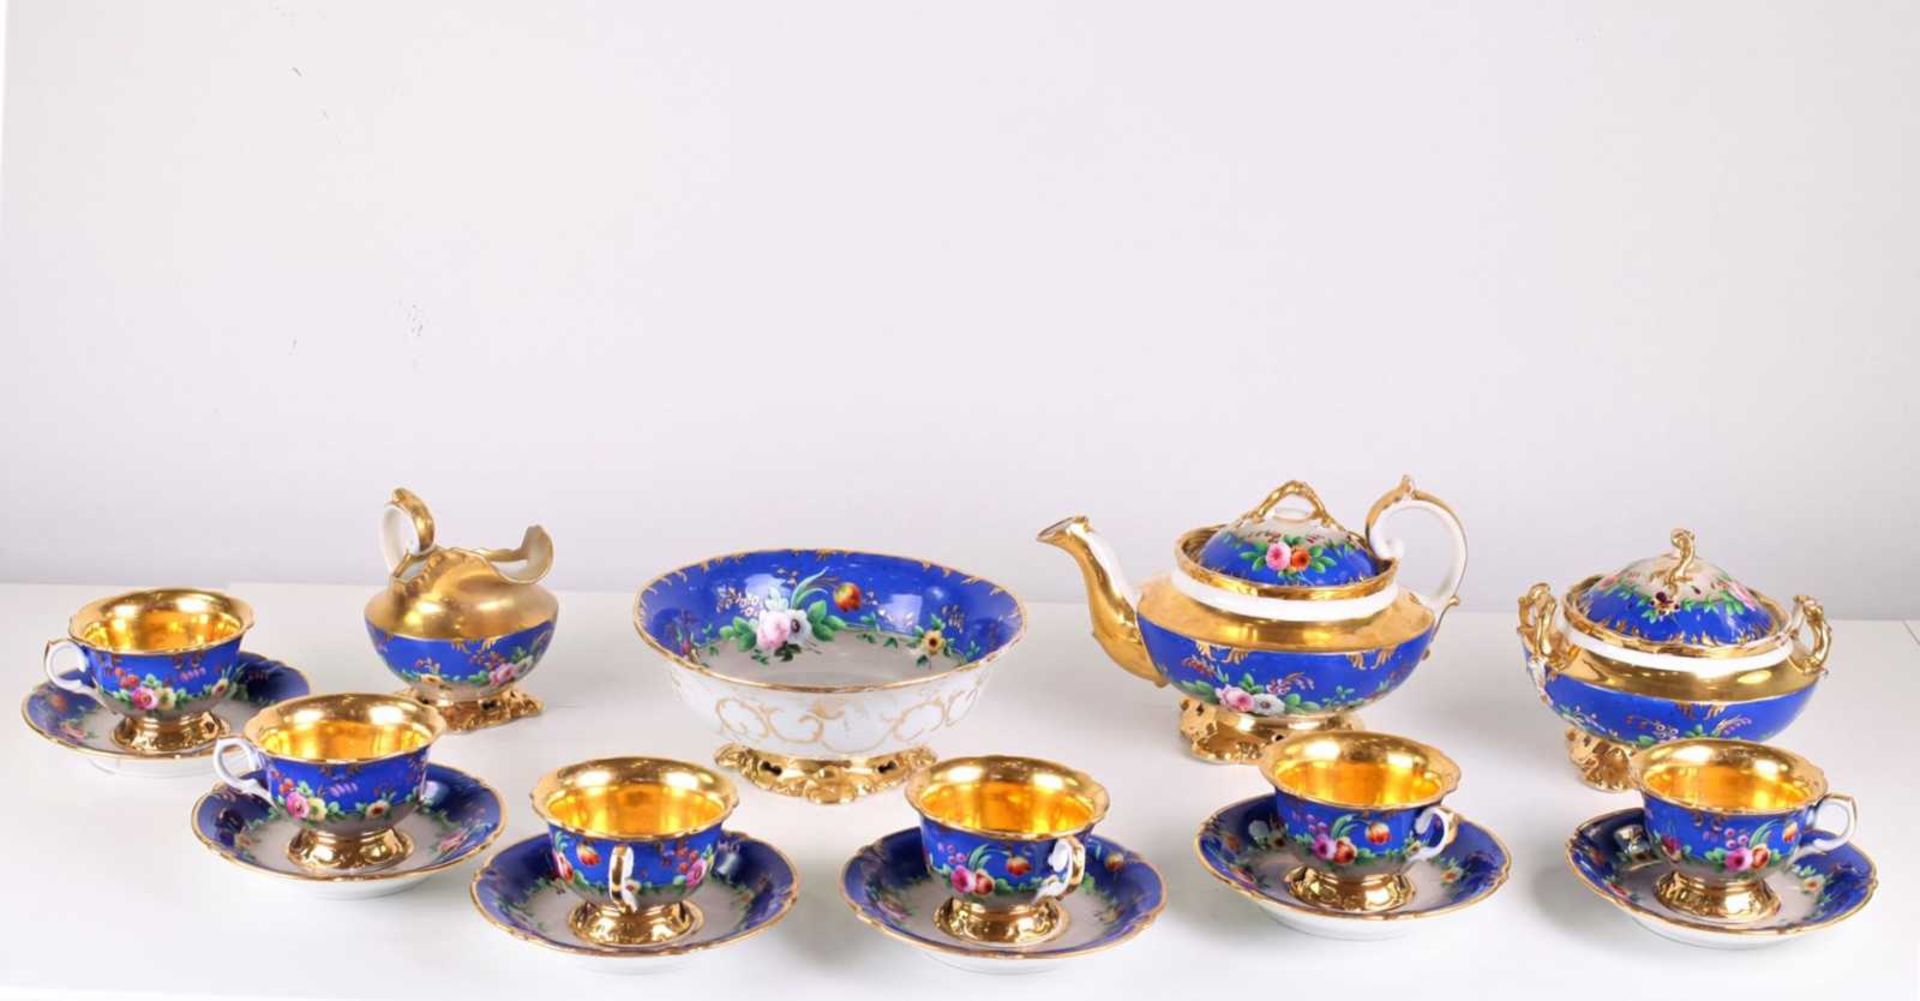 Tea set. 16 pieces: six tea cup and saucer sets, one teapot, one sugar bowl, one milk jug, one dish.